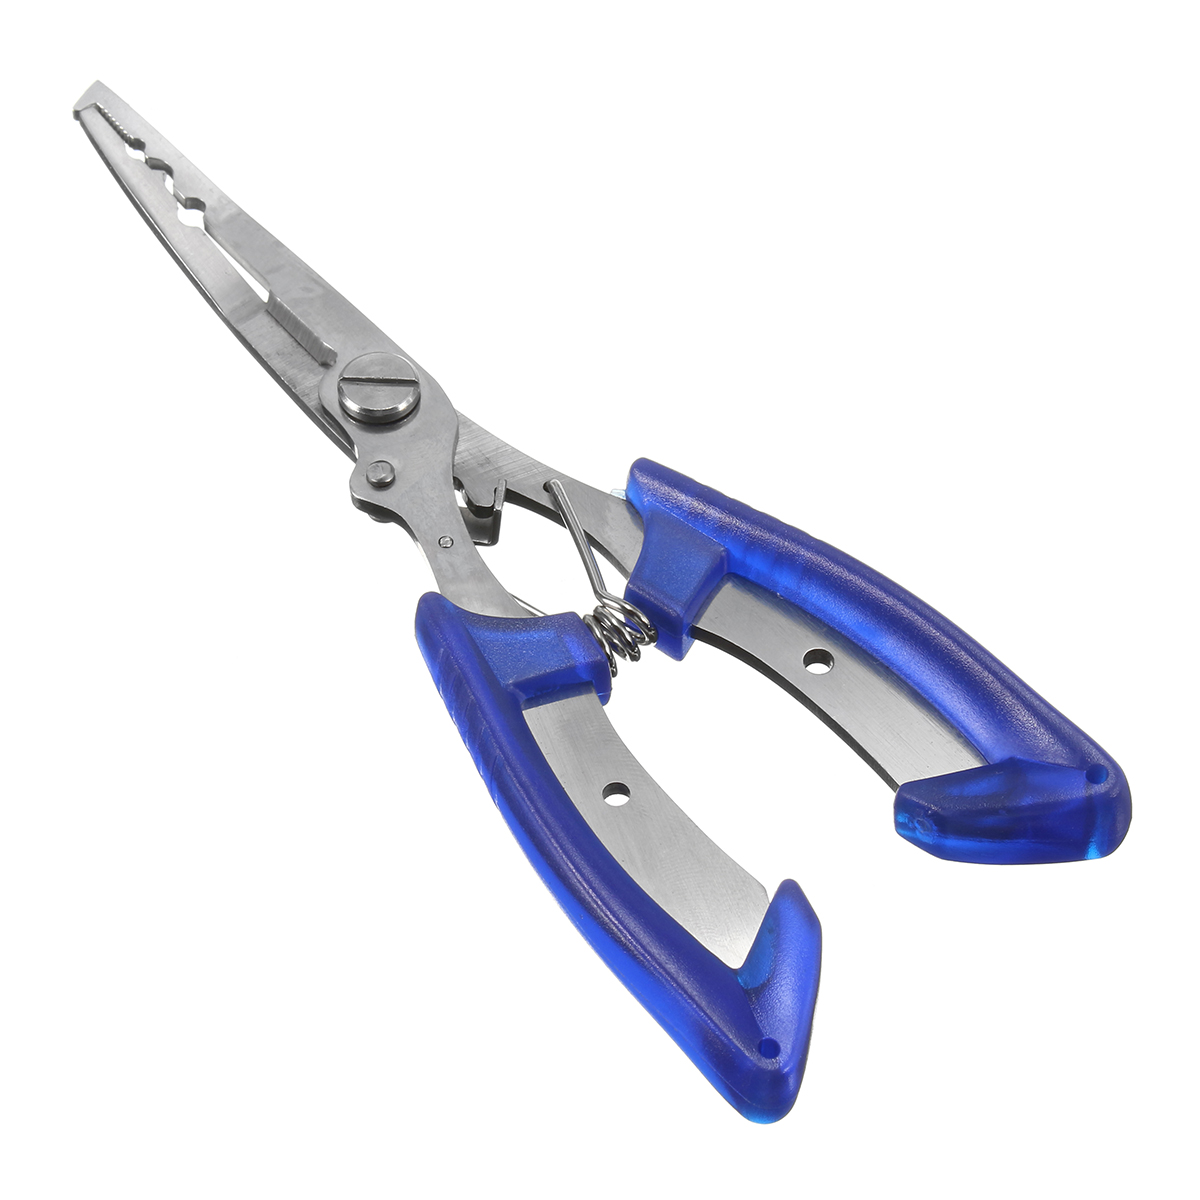 Stainless-Steel-Fishing-Pliers-Plierweiter-Scissors-Line-Cutter-Hook-Tackle-Tool-1151463-8